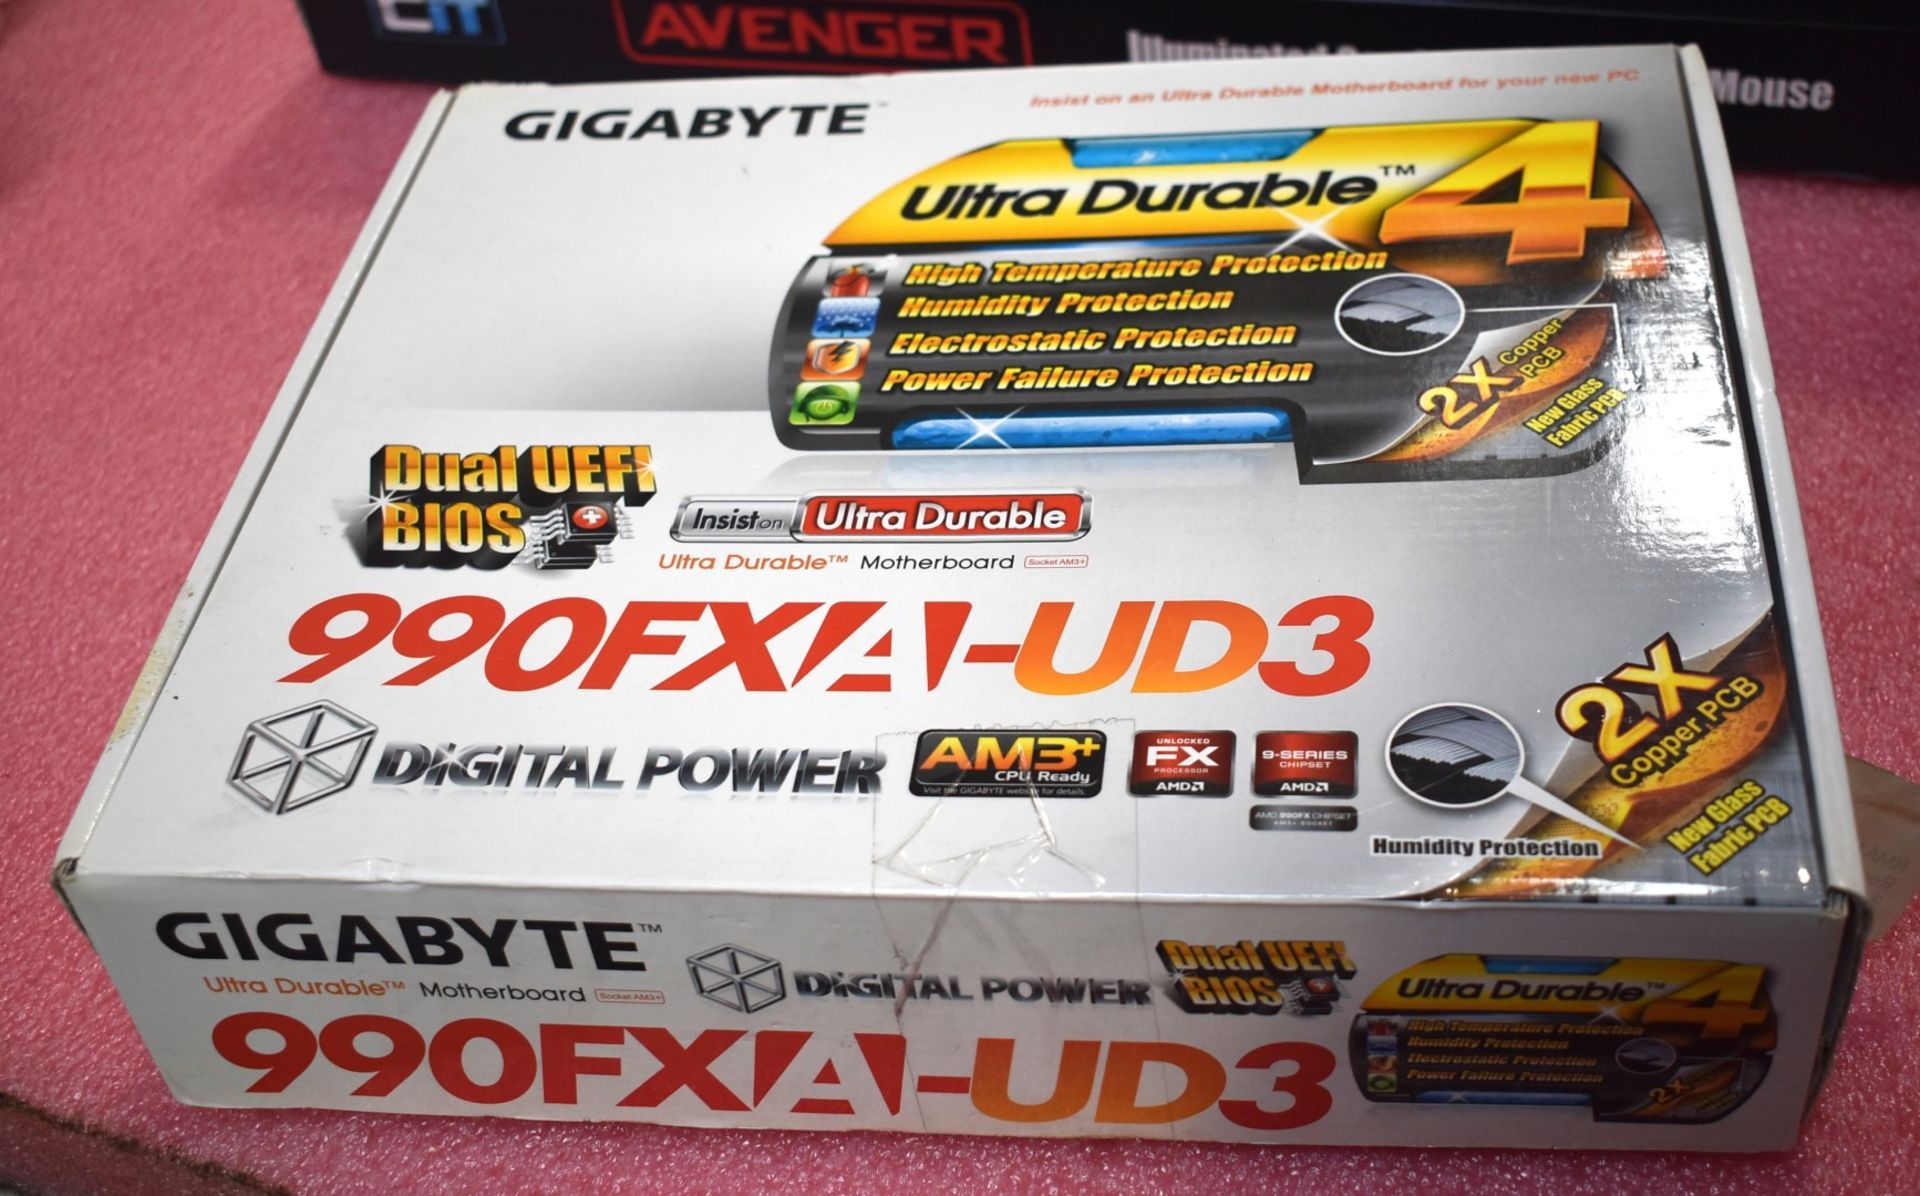 1 x Gigabyte GA-990FXA-UD3 AM3+ Motherboard With 8GB Ram - Includes Original Box - Image 2 of 7